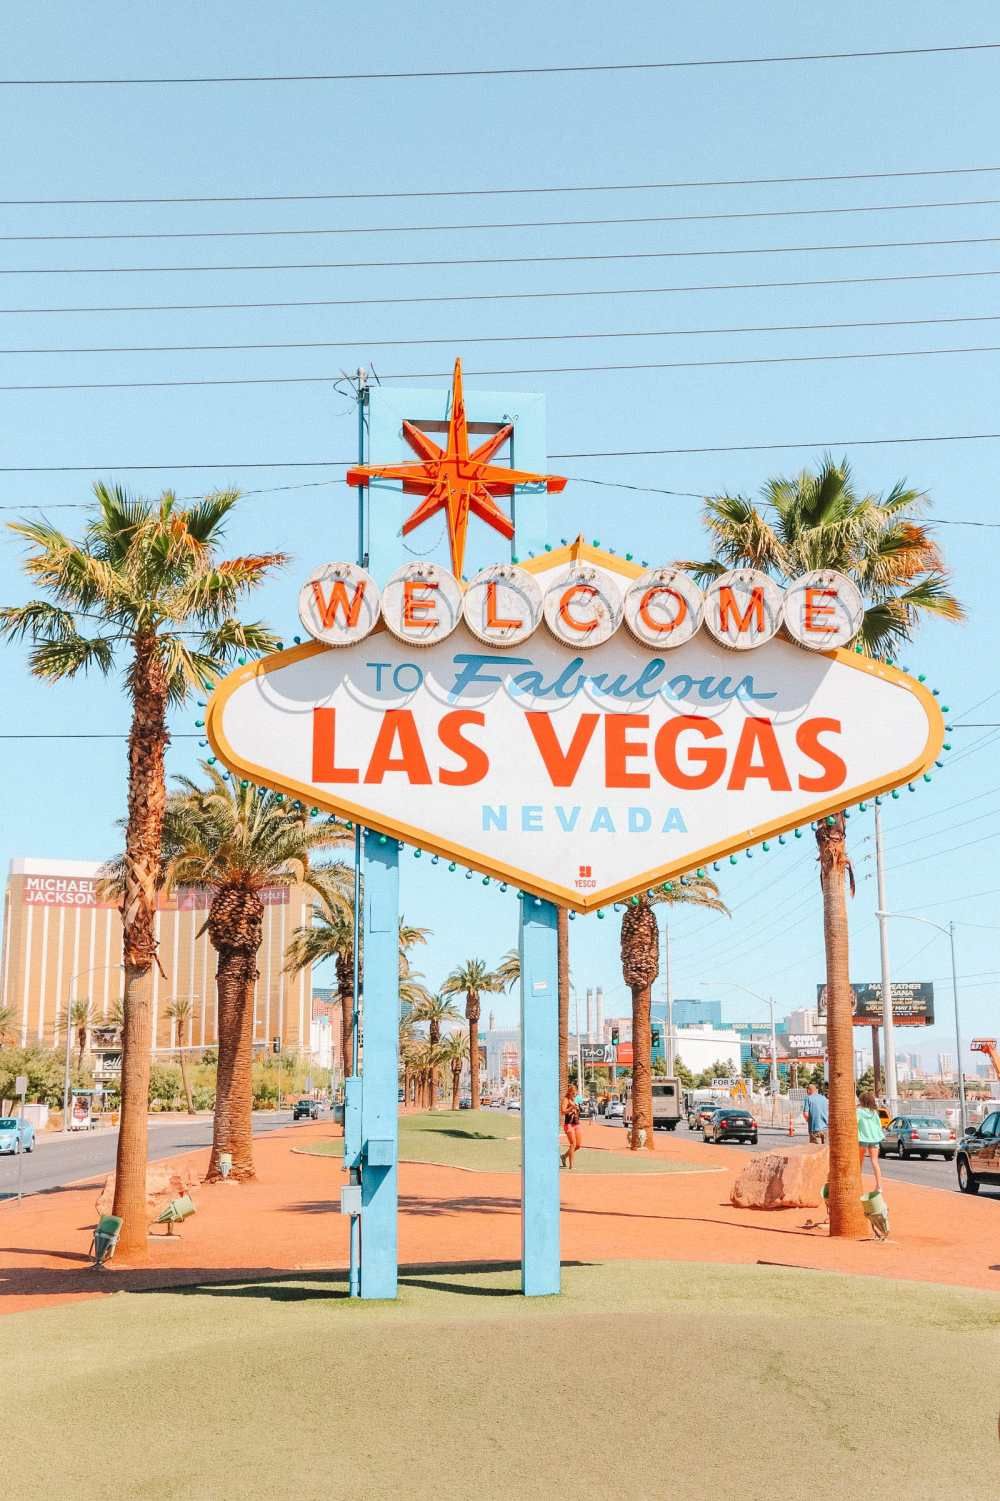 The welcome sign in las vegas - Las Vegas